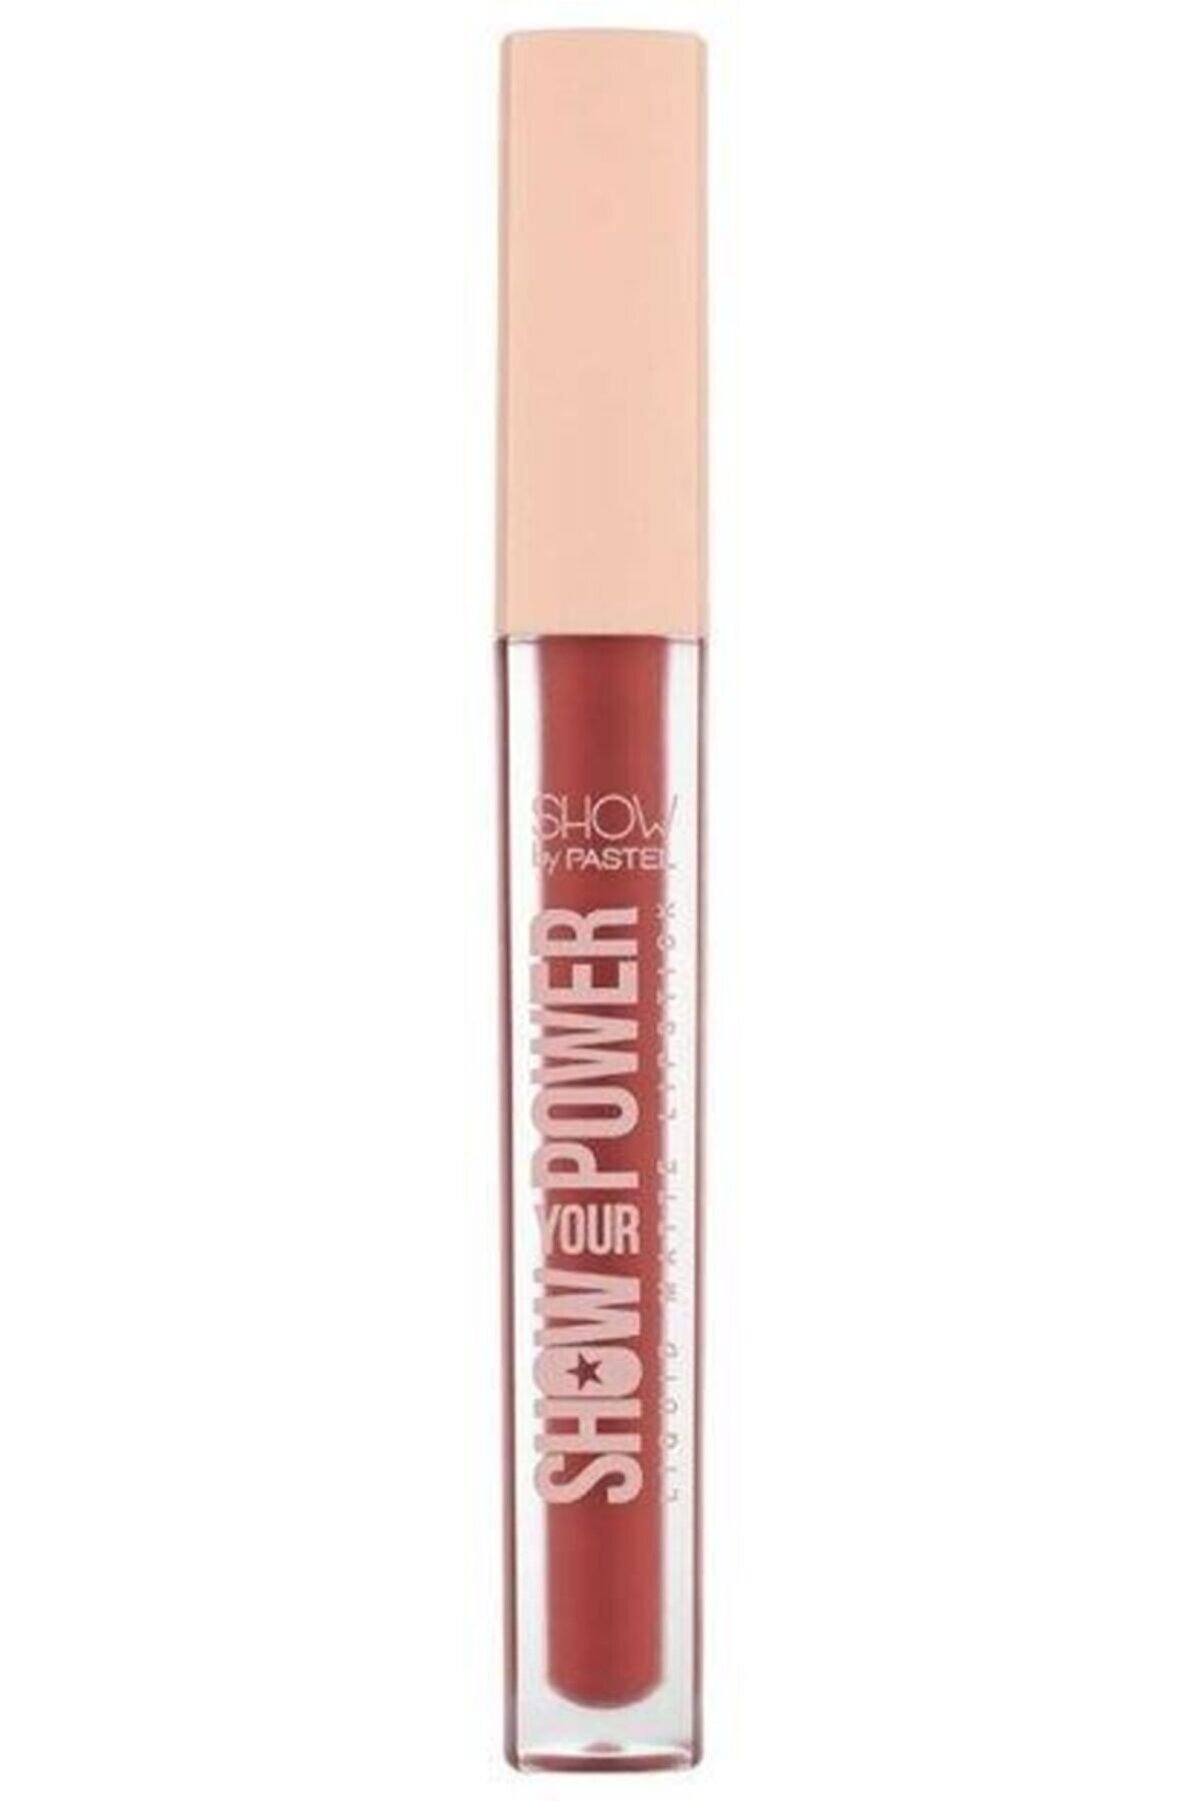 Pastel Marka: Show By - Show Your Power Liquid Matte Lipstick No: 604